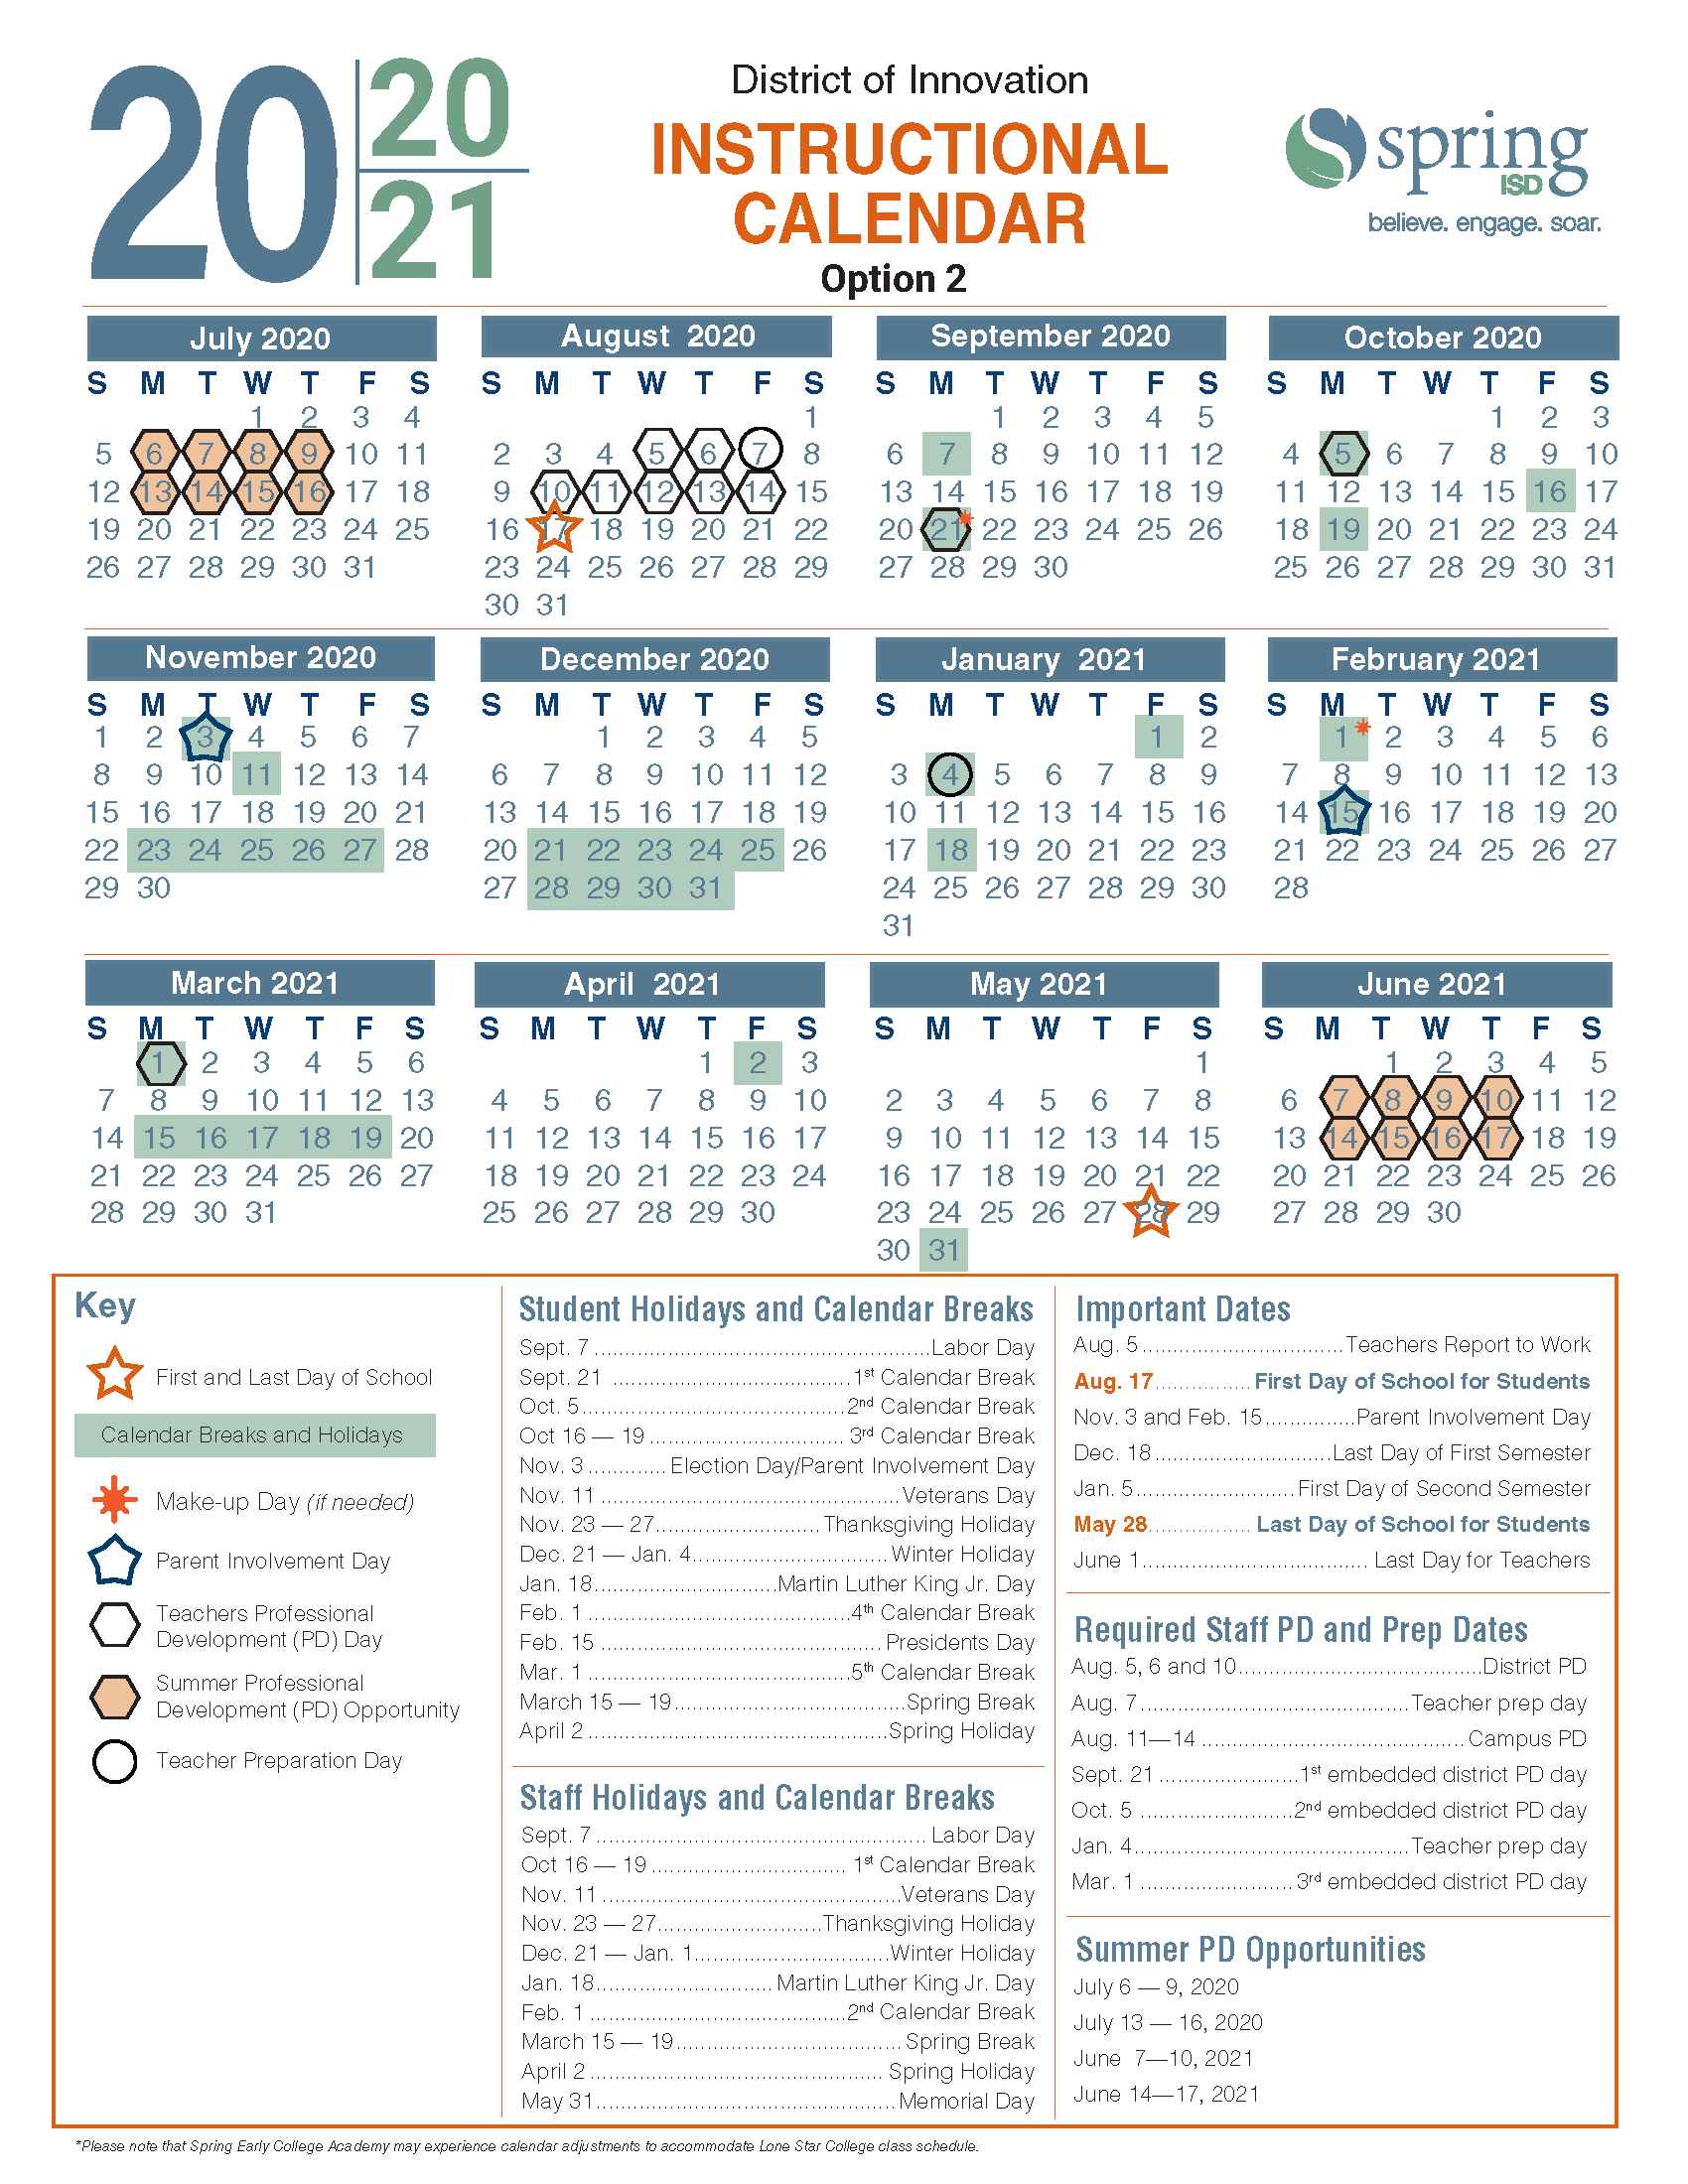 Calendar Survey / 2020-21 Instructional Calendar